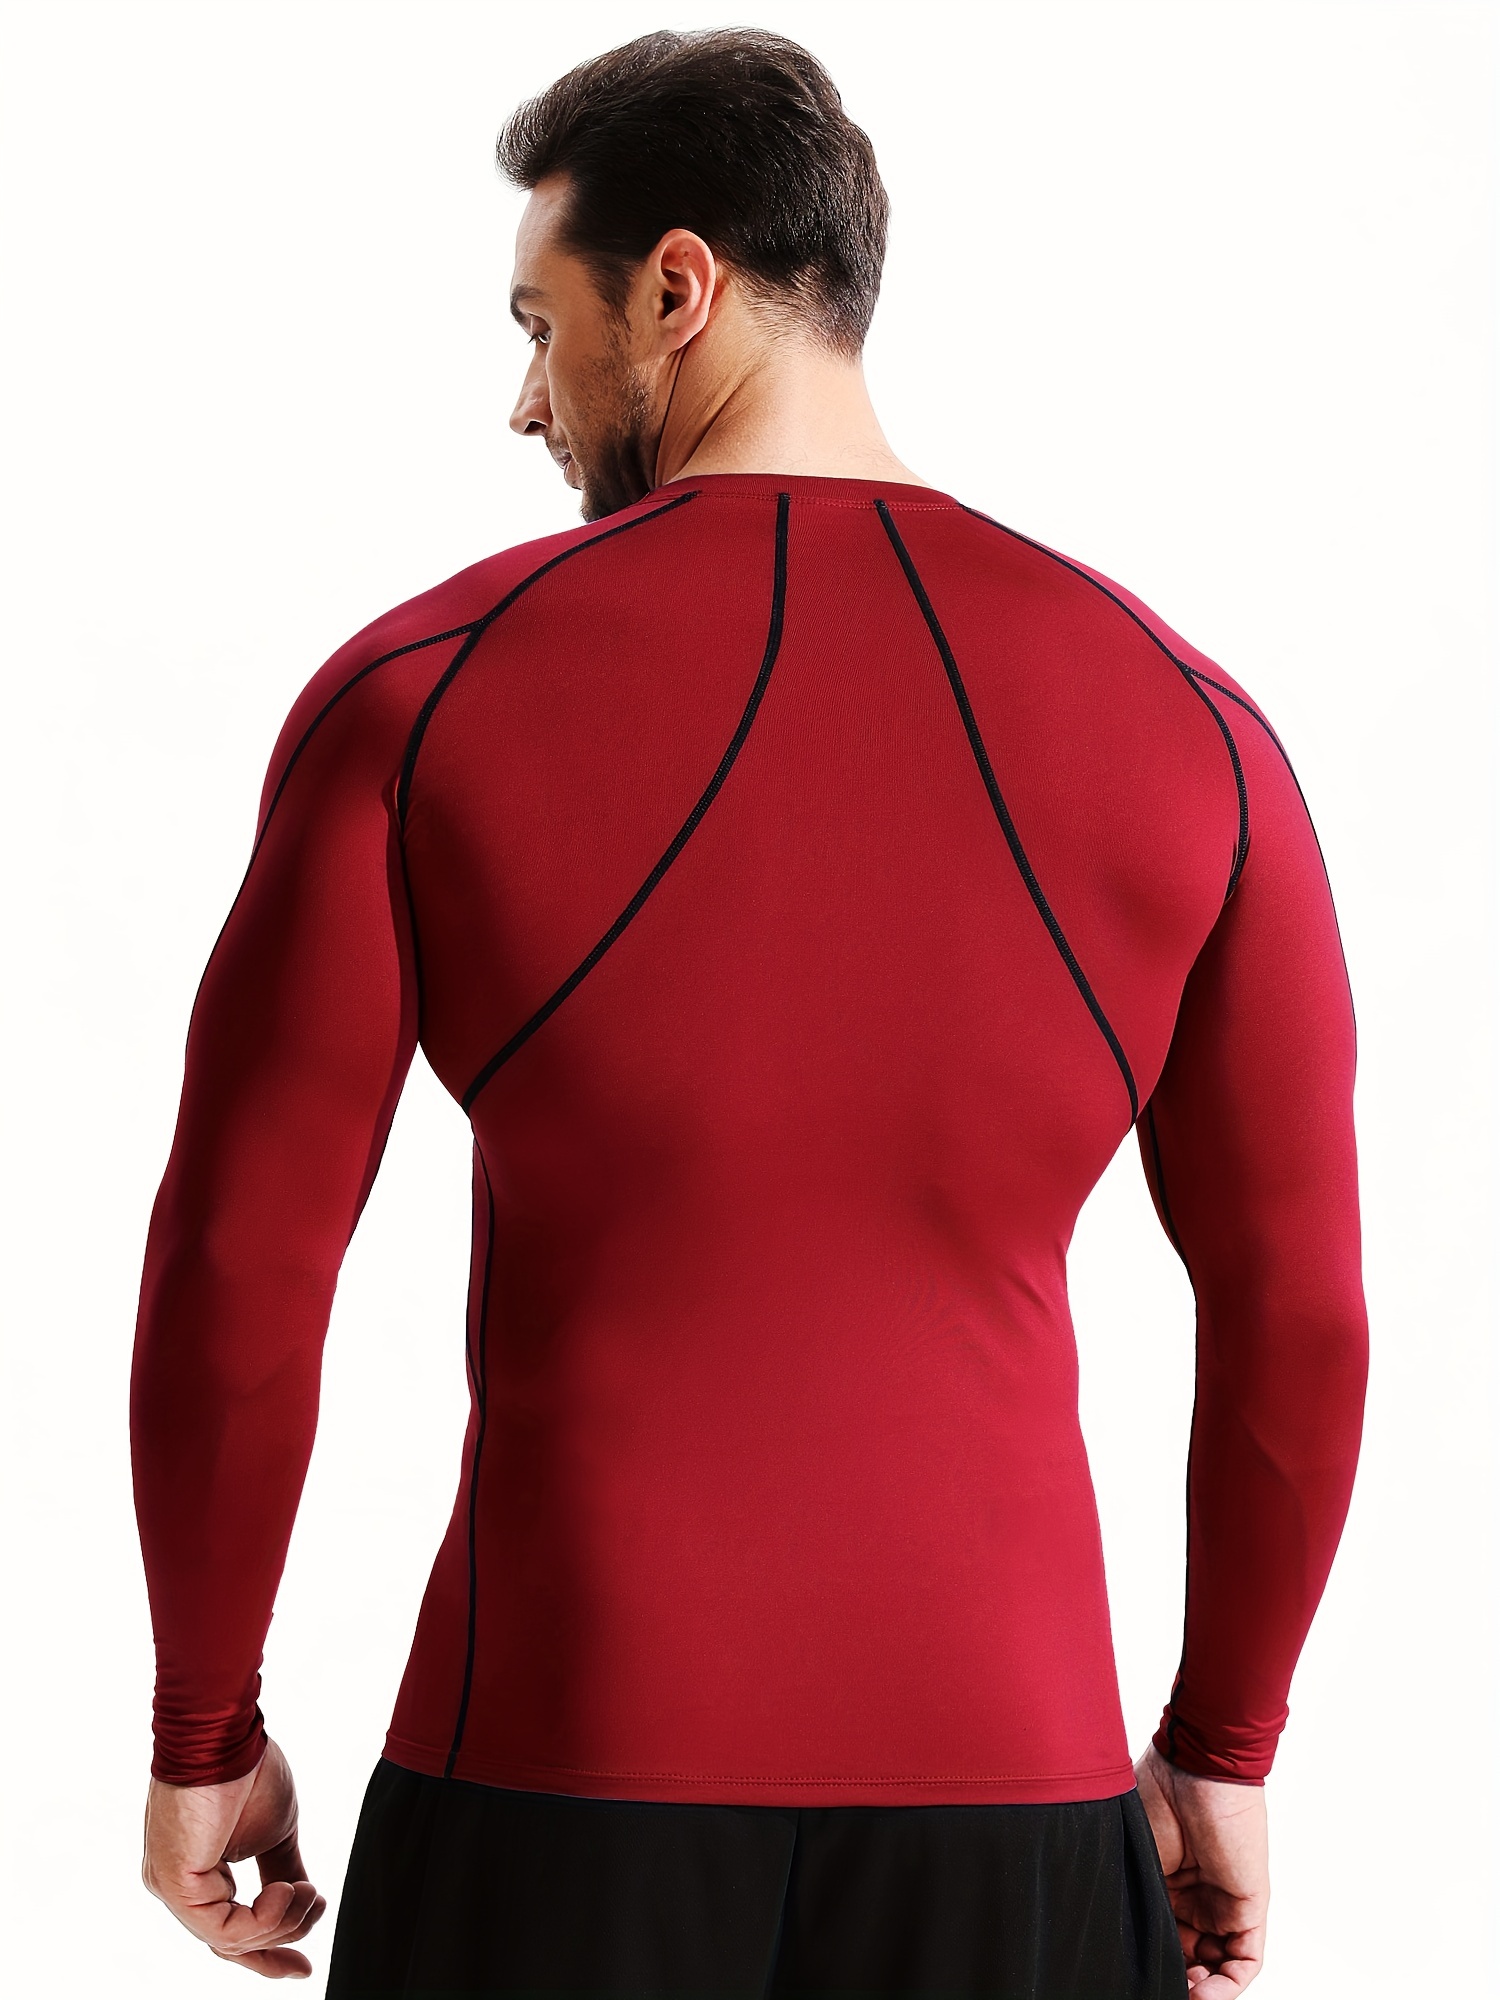 Men's Long Sleeve Compression Shirt  red compression shirt – BFIT Fashion